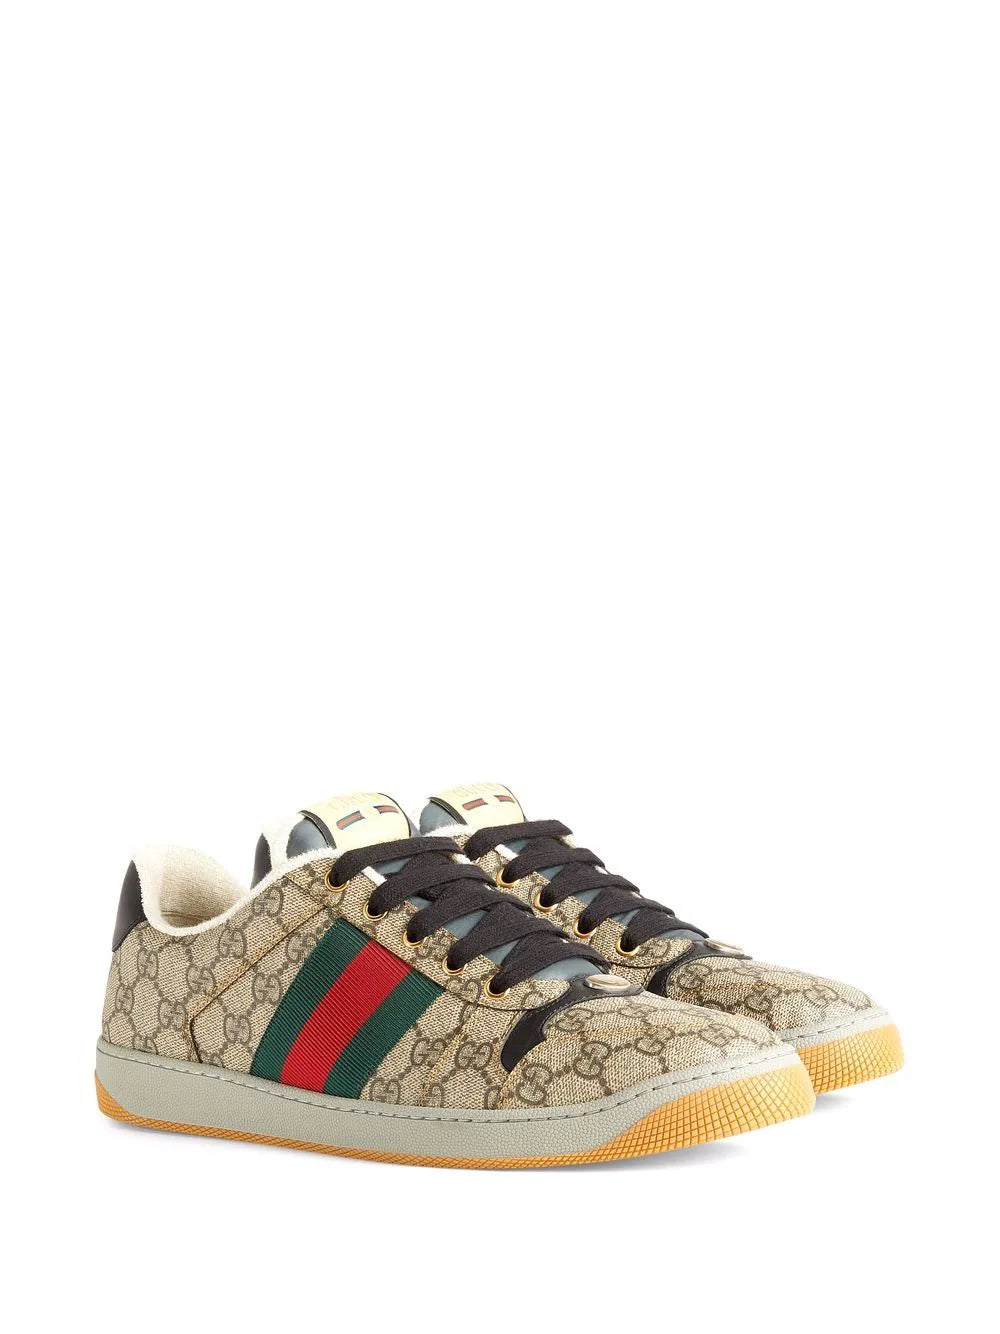 Gucci stripe air jordan 13 sneakers shoes gifts for men women l